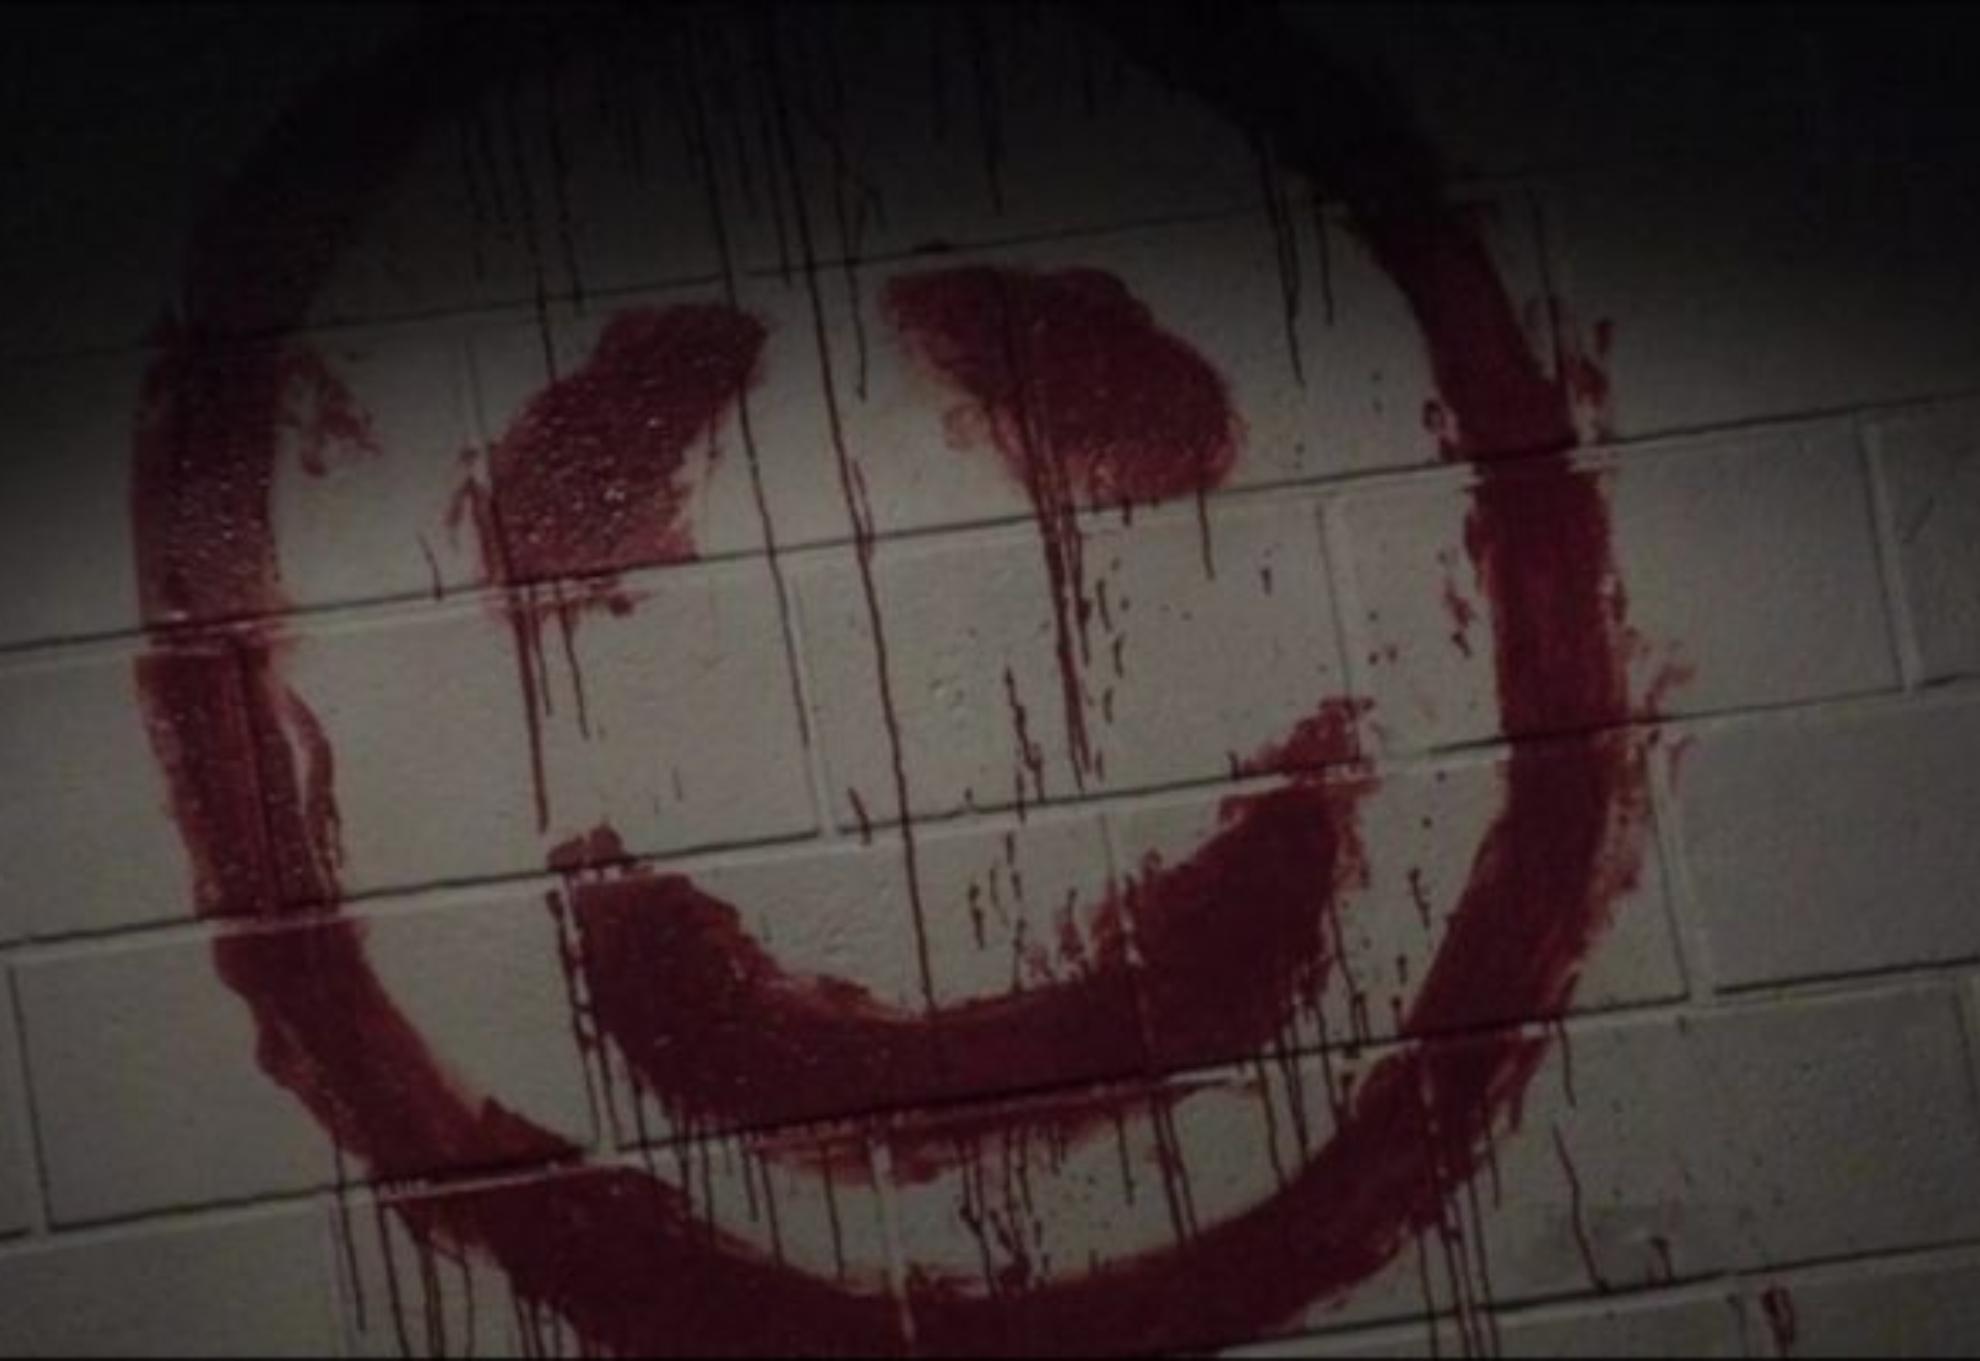 Smiley Face Killer: Αστικός μύθος ή η πιο περιεργη σειρά θανάτων στην ιστορία της εγκληματολογίας;